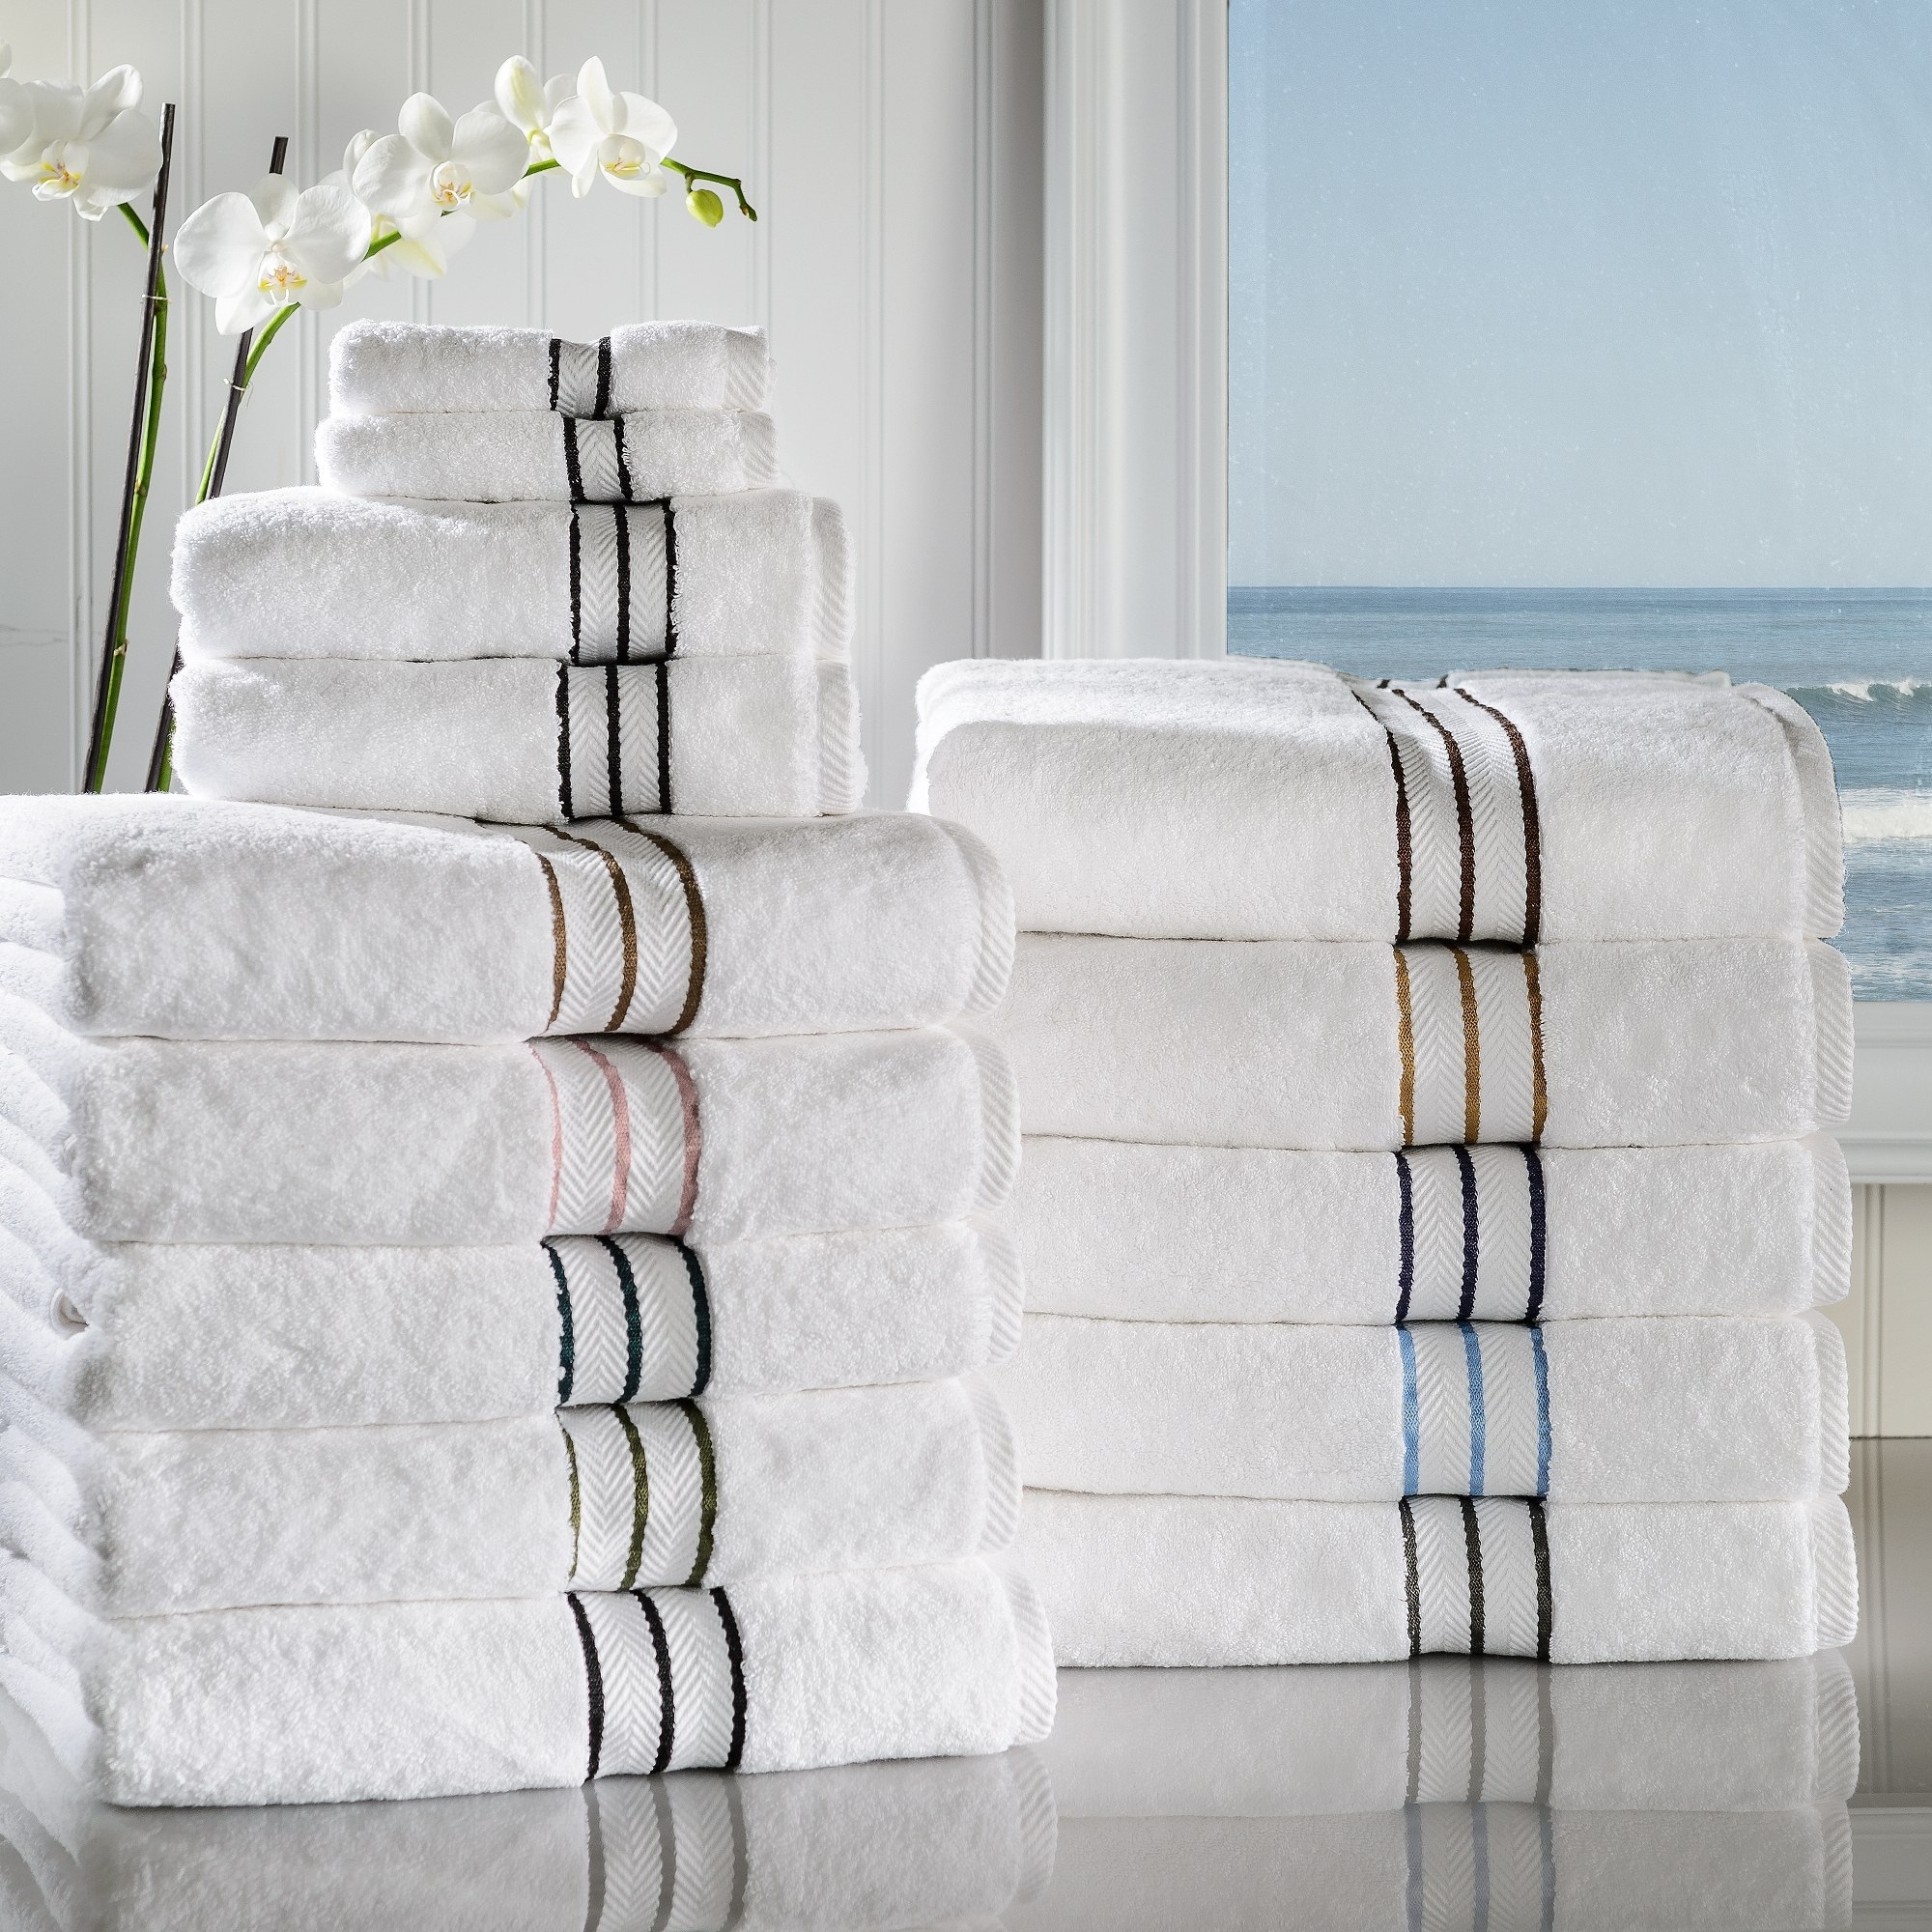 Plush Coastal Blue Towel Resort Bundle (4 Wash + 4 Hand + 4 Bath Towel